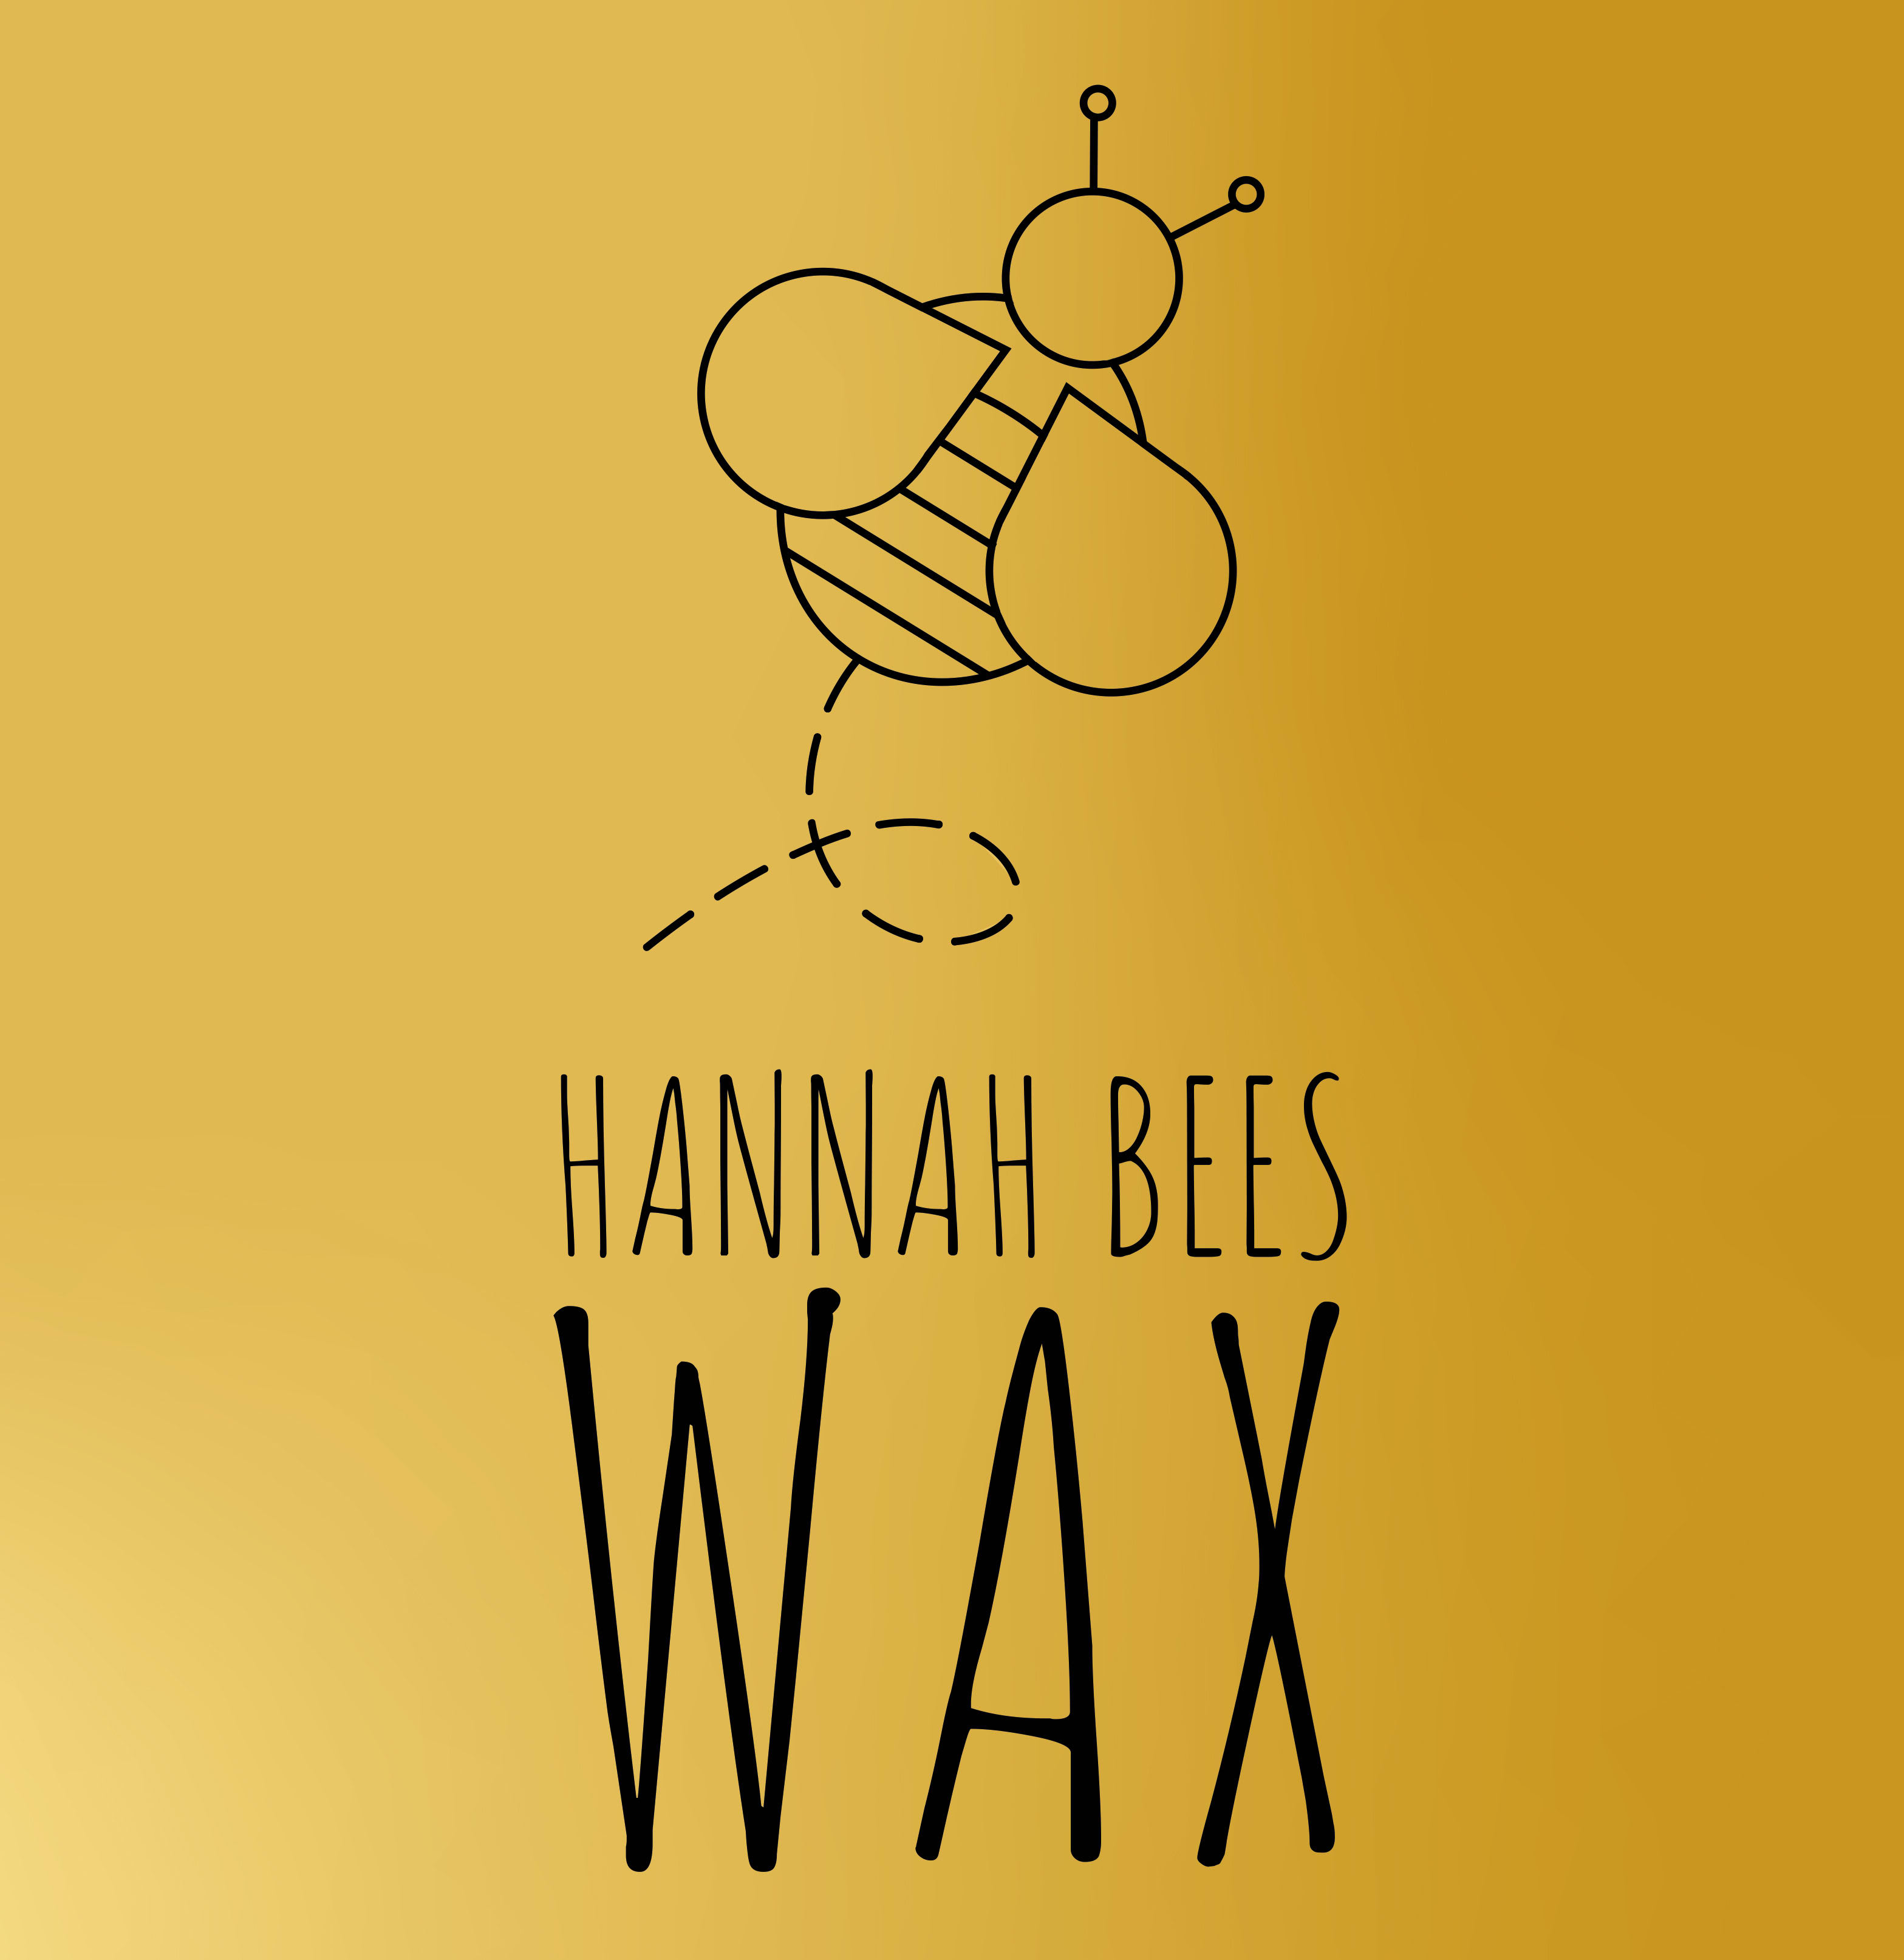 Hannahbees Wax